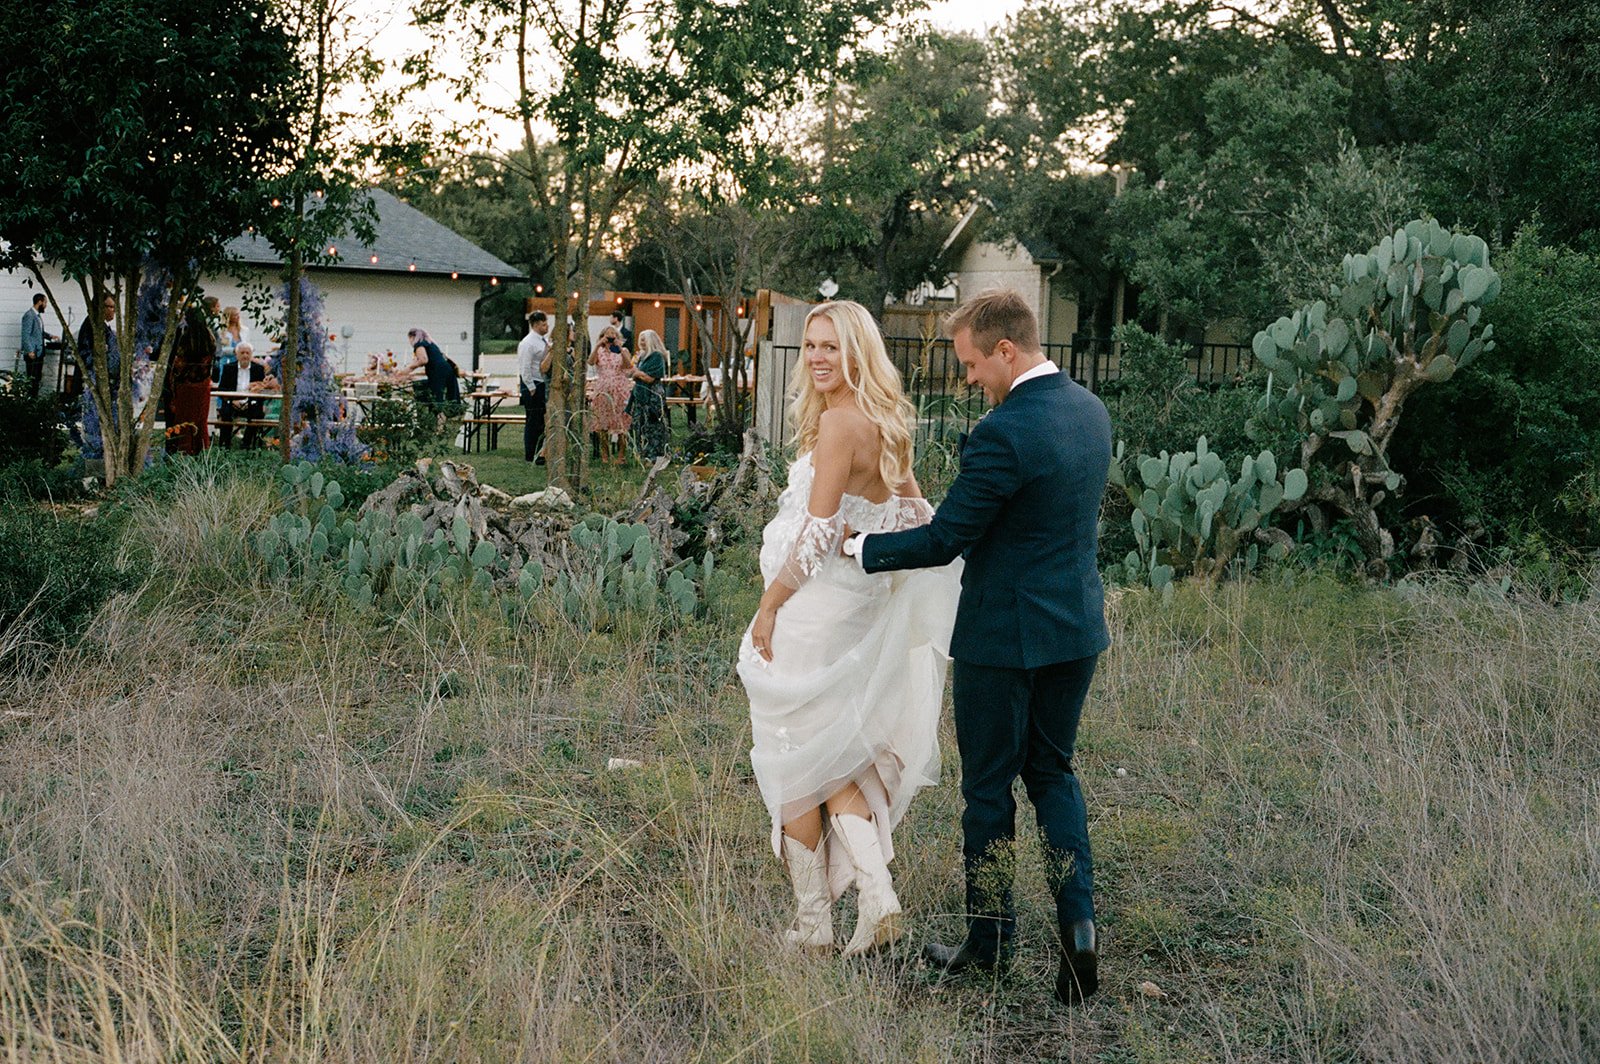 Best-Austin-Wedding-Photographers-Elopement-Film-35mm-Asheville-Santa-Barbara-Backyard-134.jpg